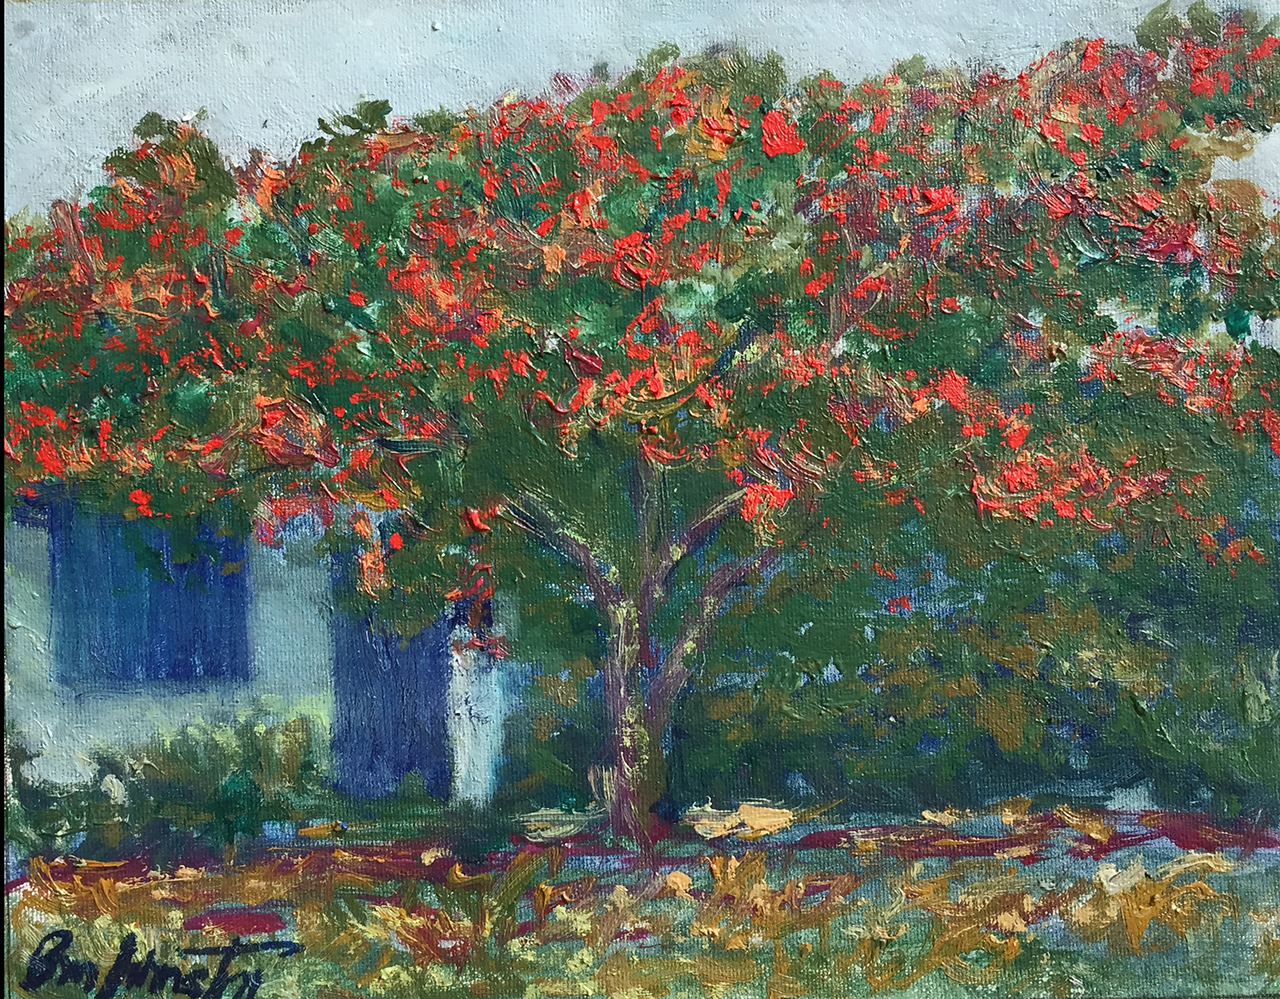 Arbol de fuego II - Brian M. Johnston - North American Impressionist - (2018) 8" x 10" oil on canvas - US$ 250.